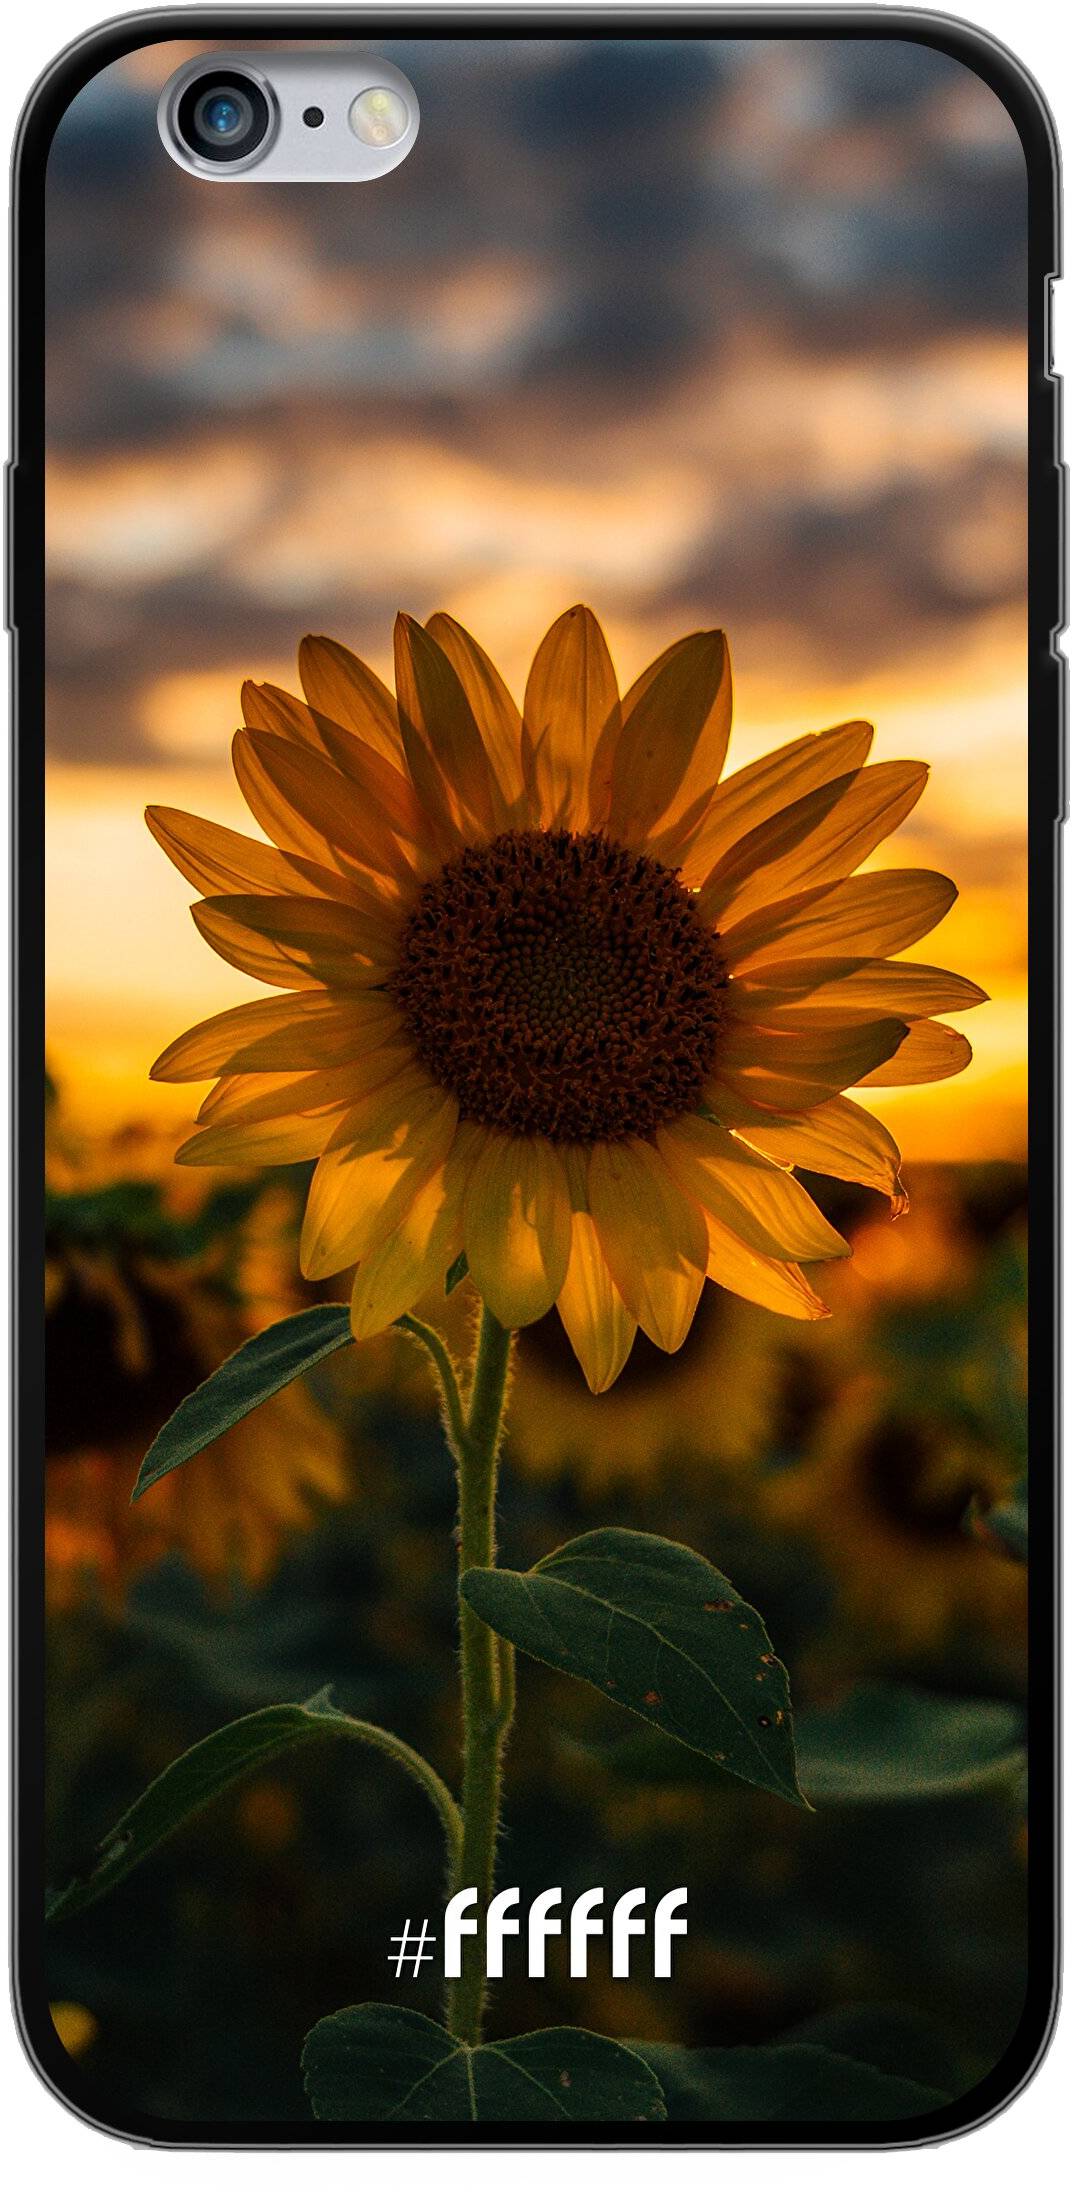 Sunset Sunflower iPhone 6